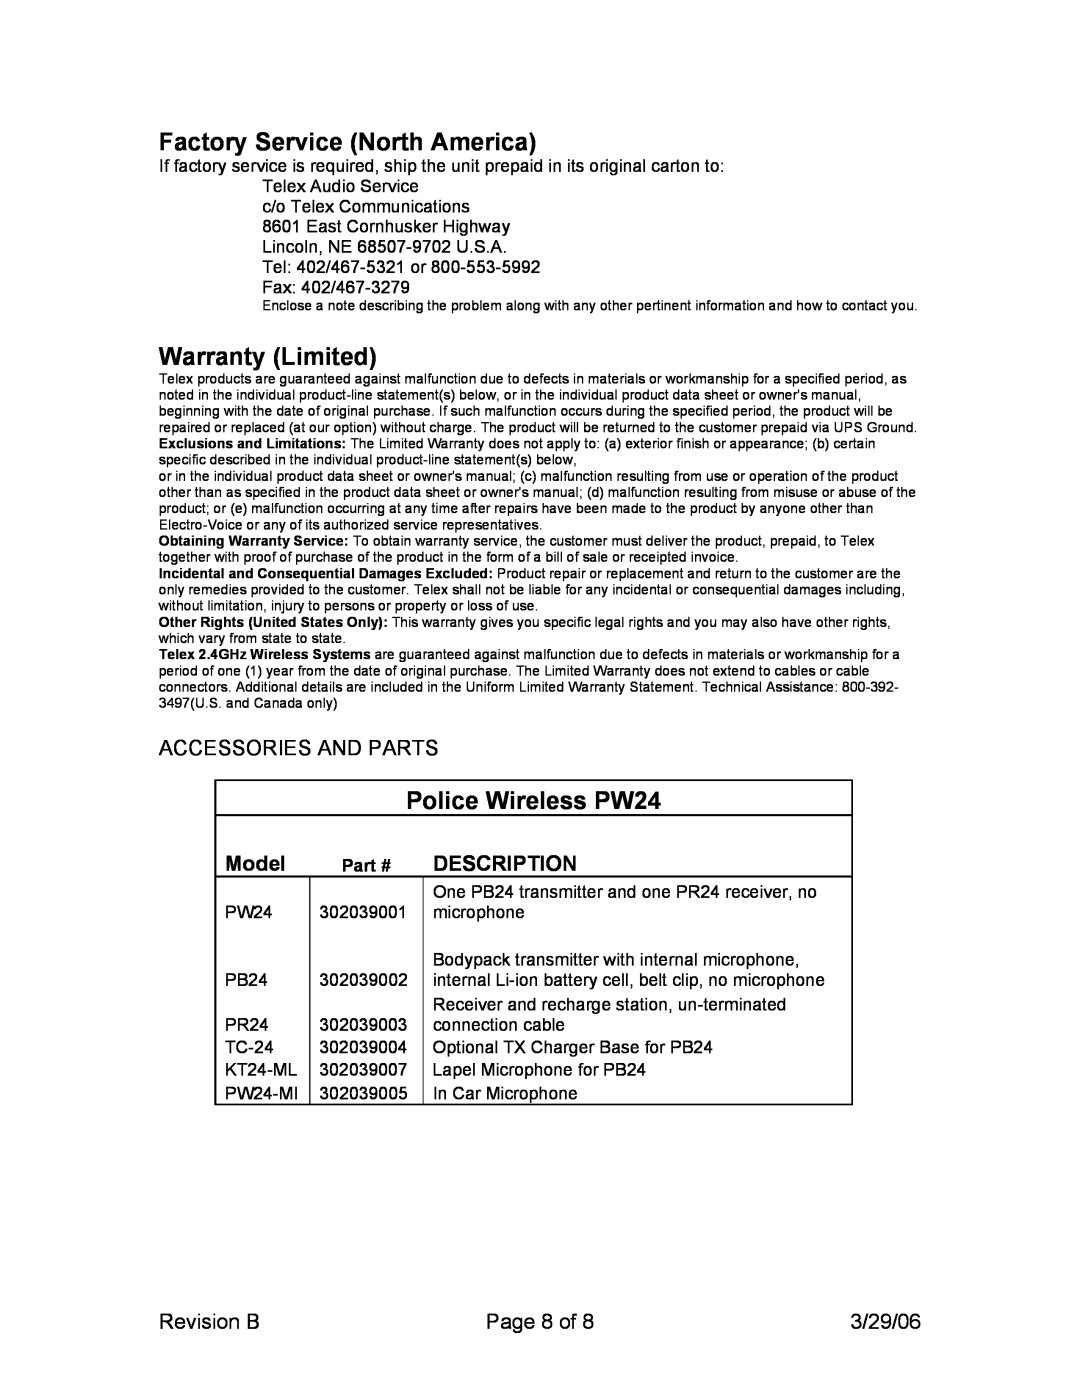 Telex manual Model, Description, Factory Service North America, Warranty Limited, Police Wireless PW24 